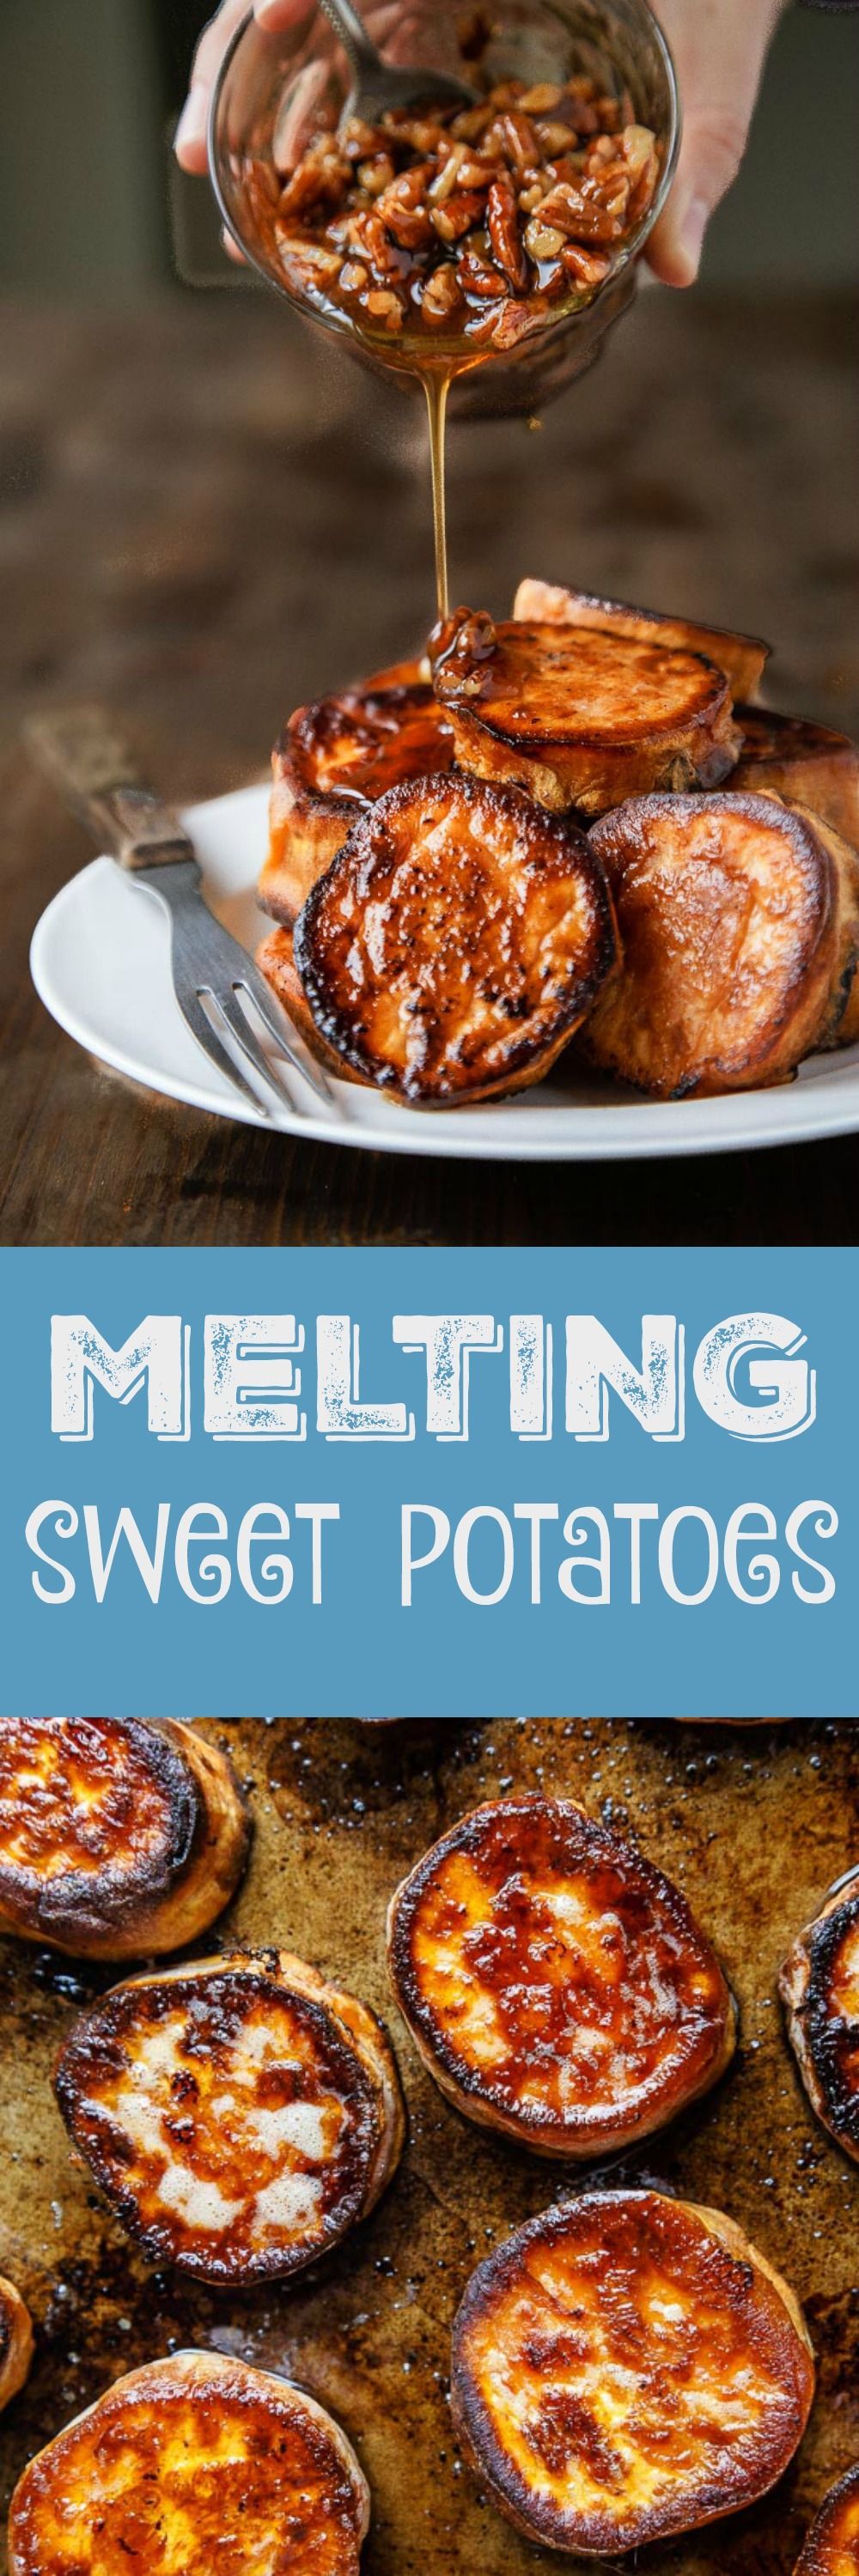 Melting potatoes, sweet potato version! The BEST oven roasted sweet potato recipe. Like, ever.